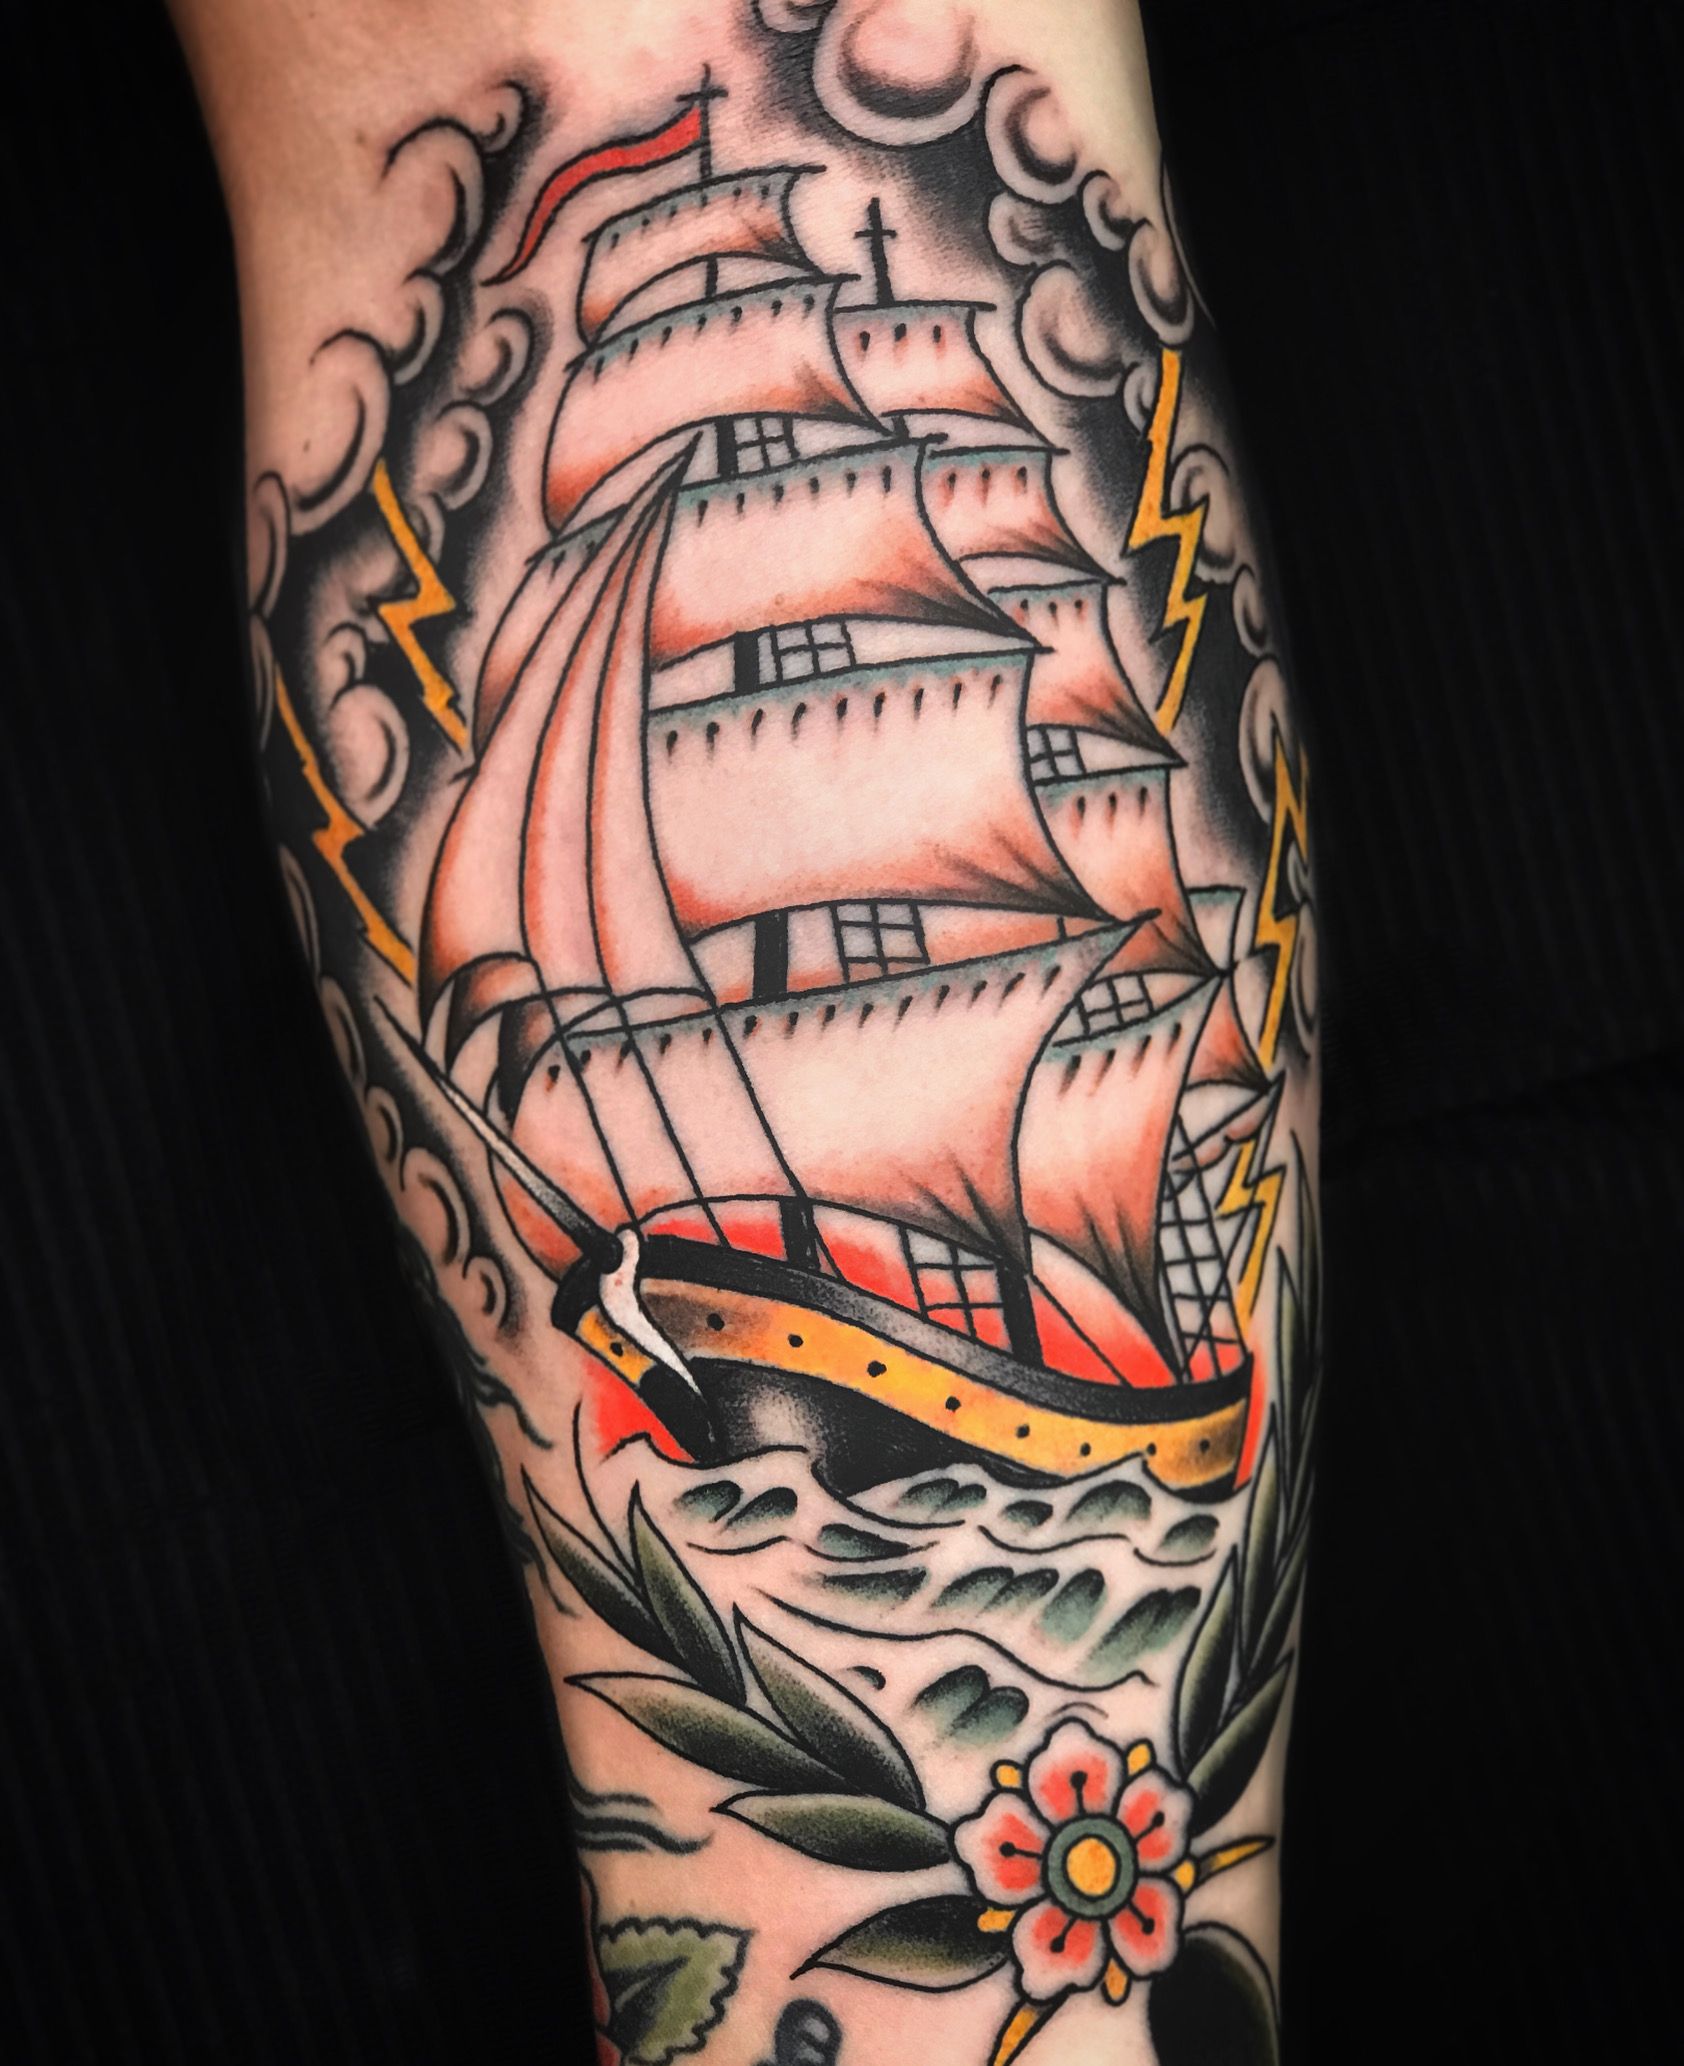 Ship Tattoos - Explore the World of Ship Tattoo Designs